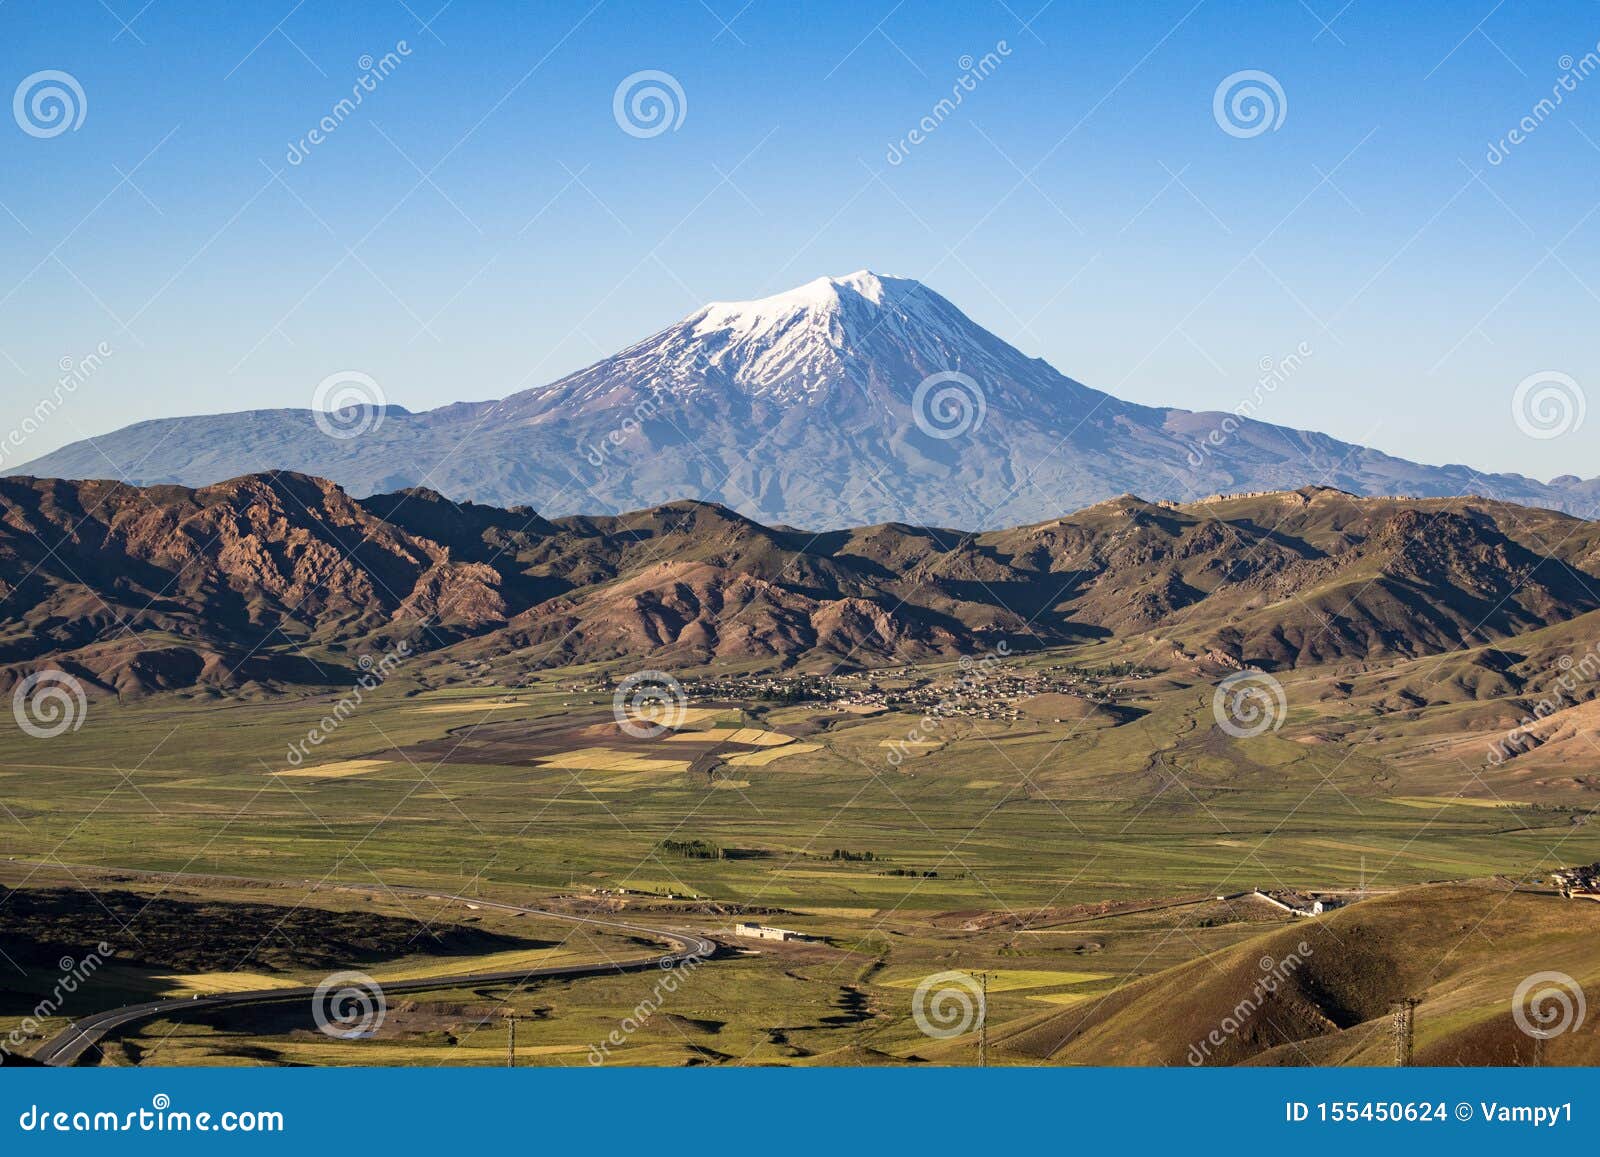 Mount Ararat Agri Dagi Mountain Volcano Igdir Turkey Middle East Nature Landscape Aerial View Noah Ark Stock Photo Image Of Grassland Armenia